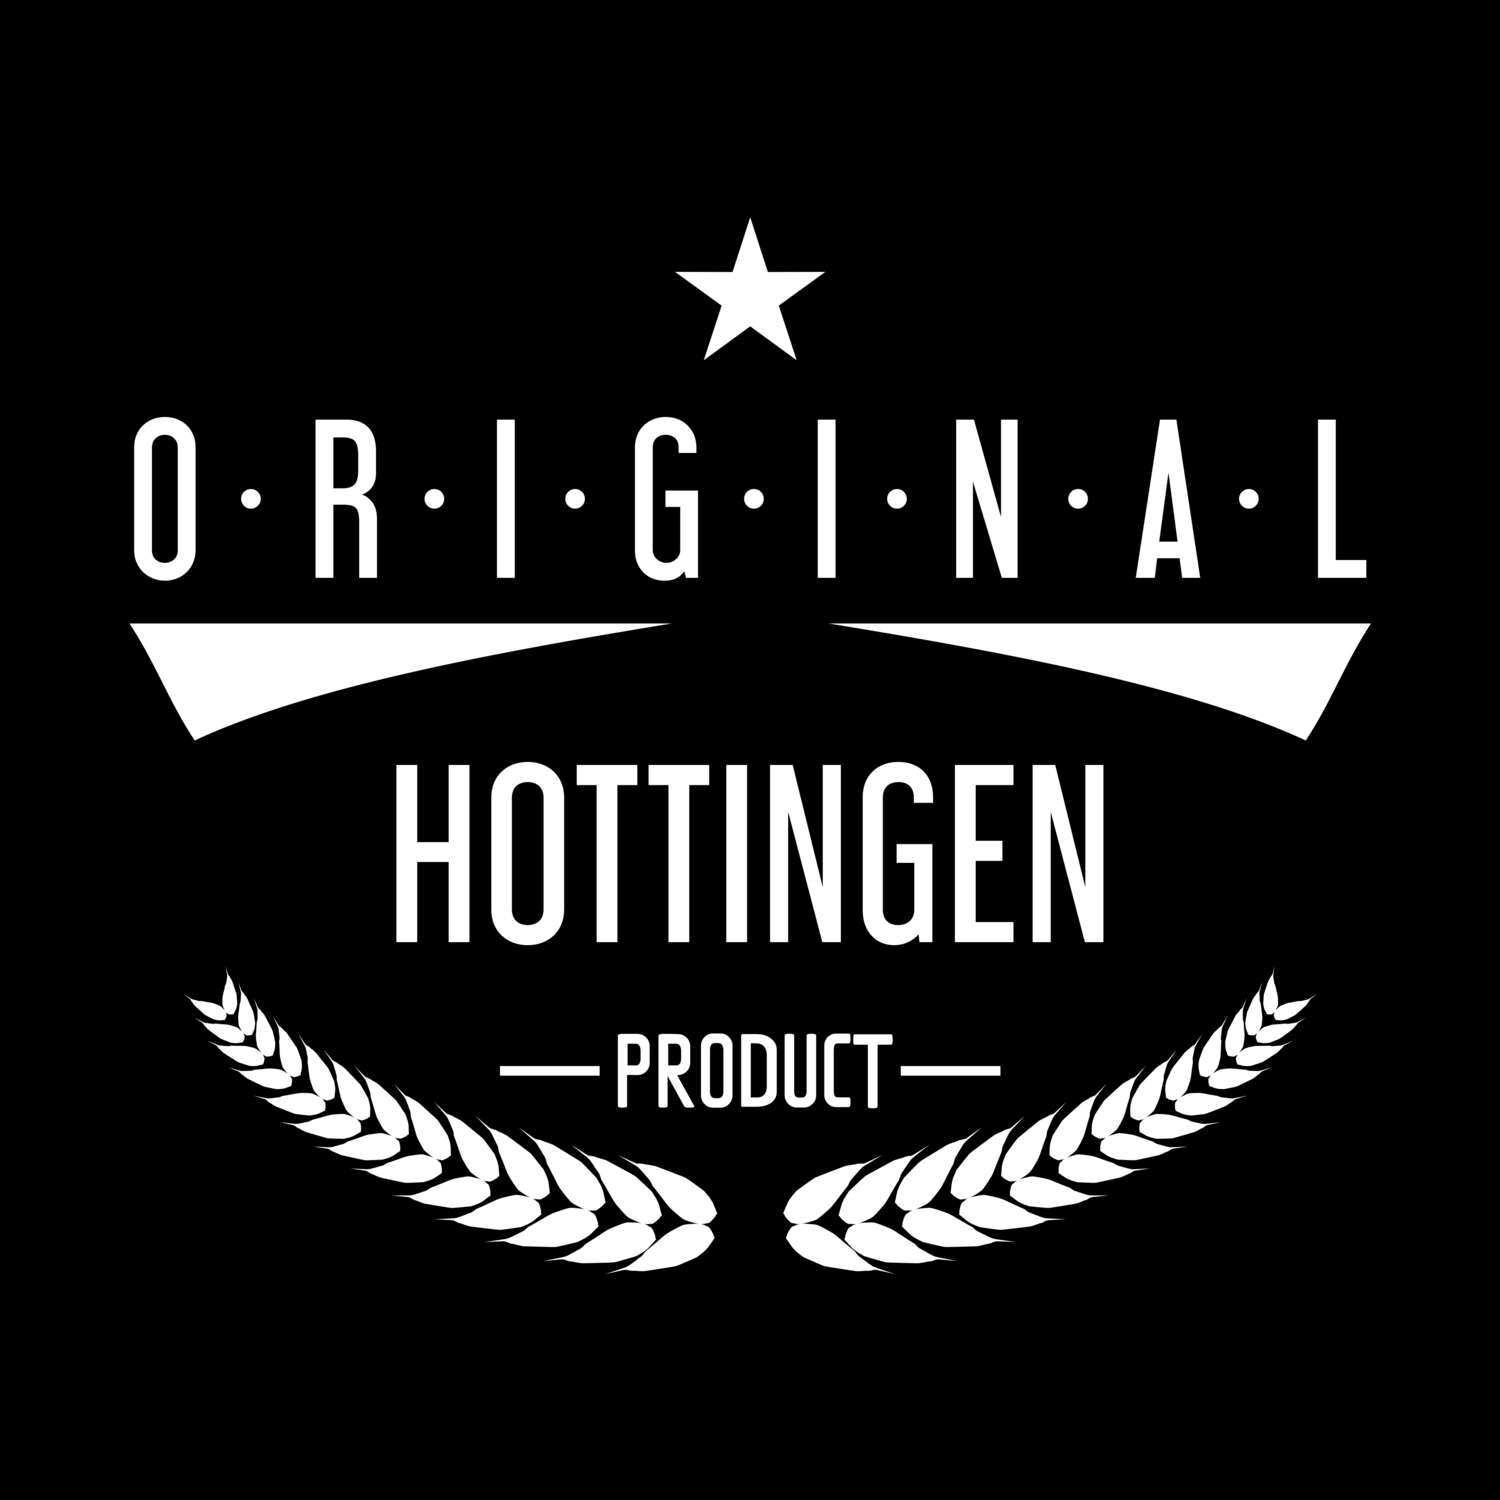 Hottingen T-Shirt »Original Product«